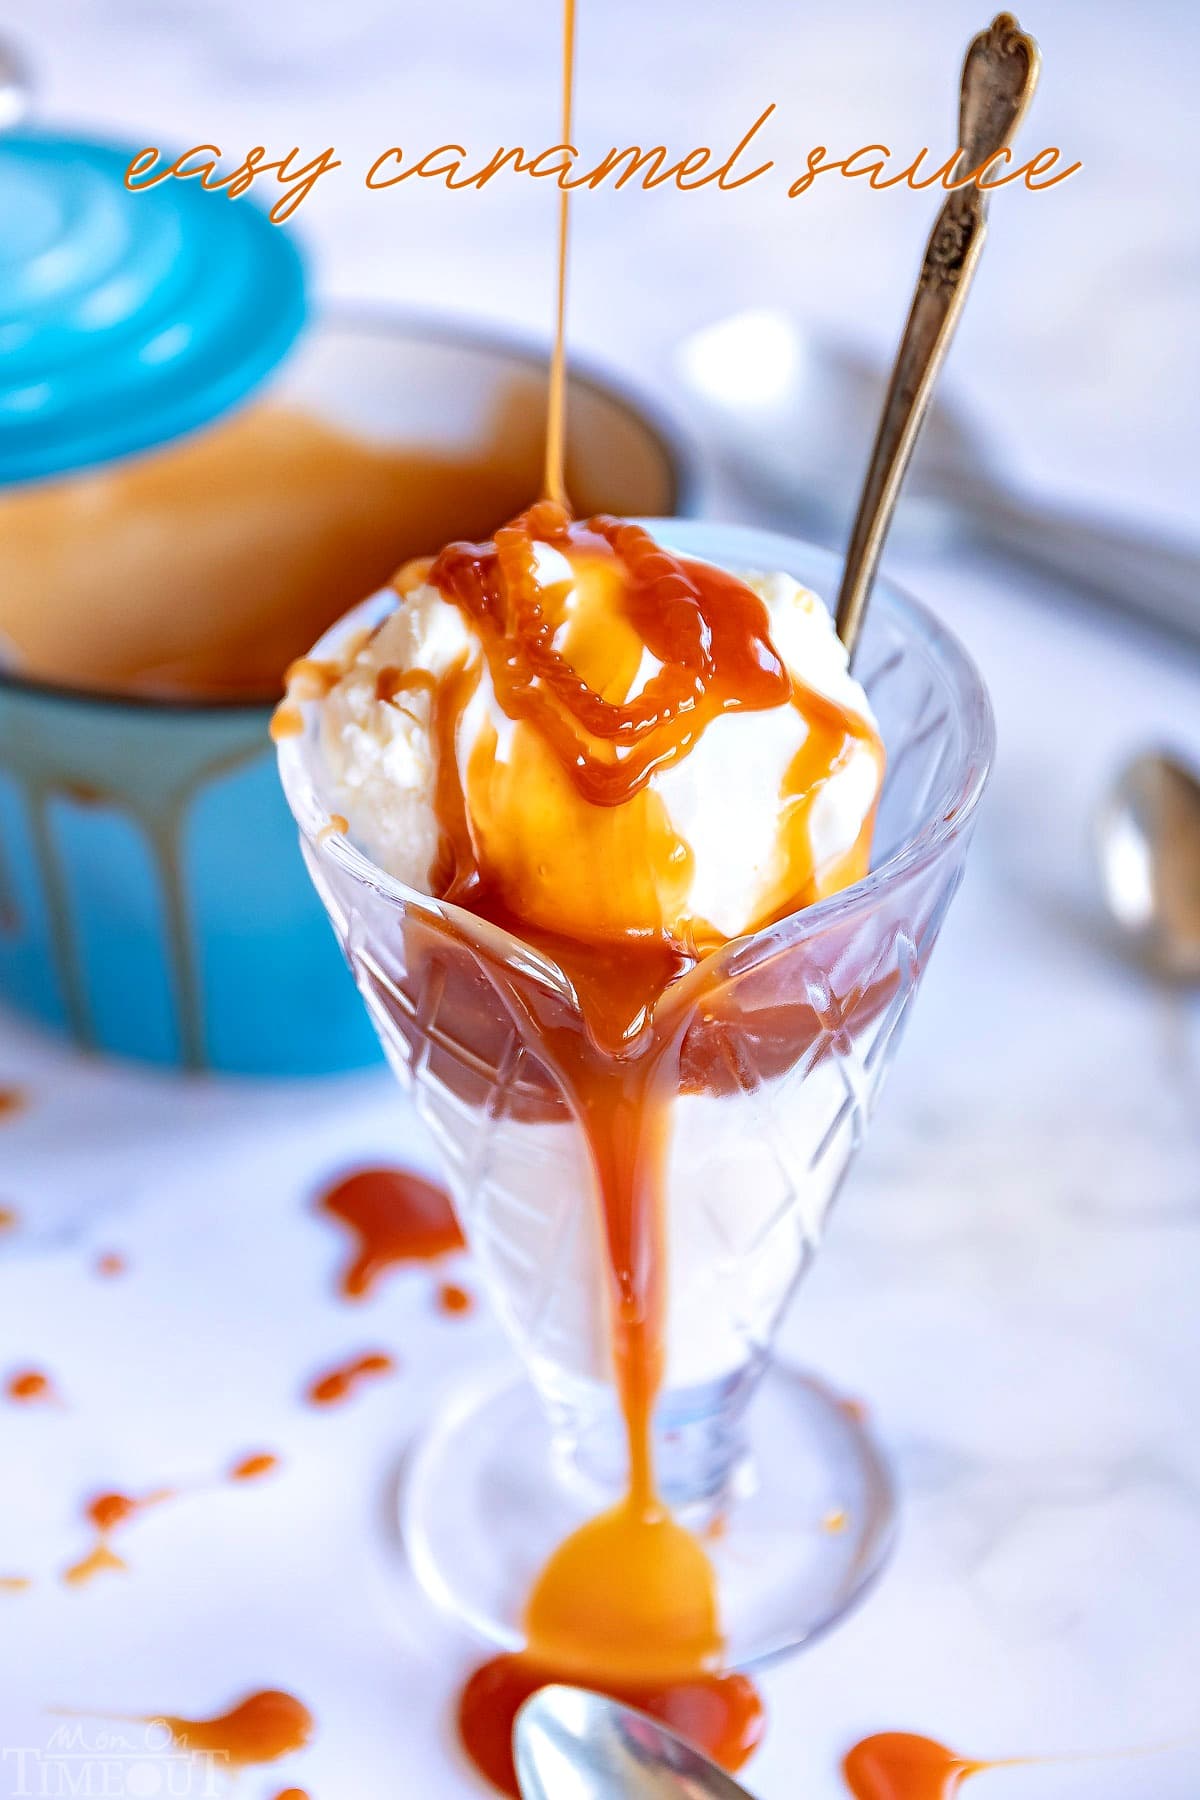 caramel-sauce-recipe-with-vanilla-ice-cream-in-dish